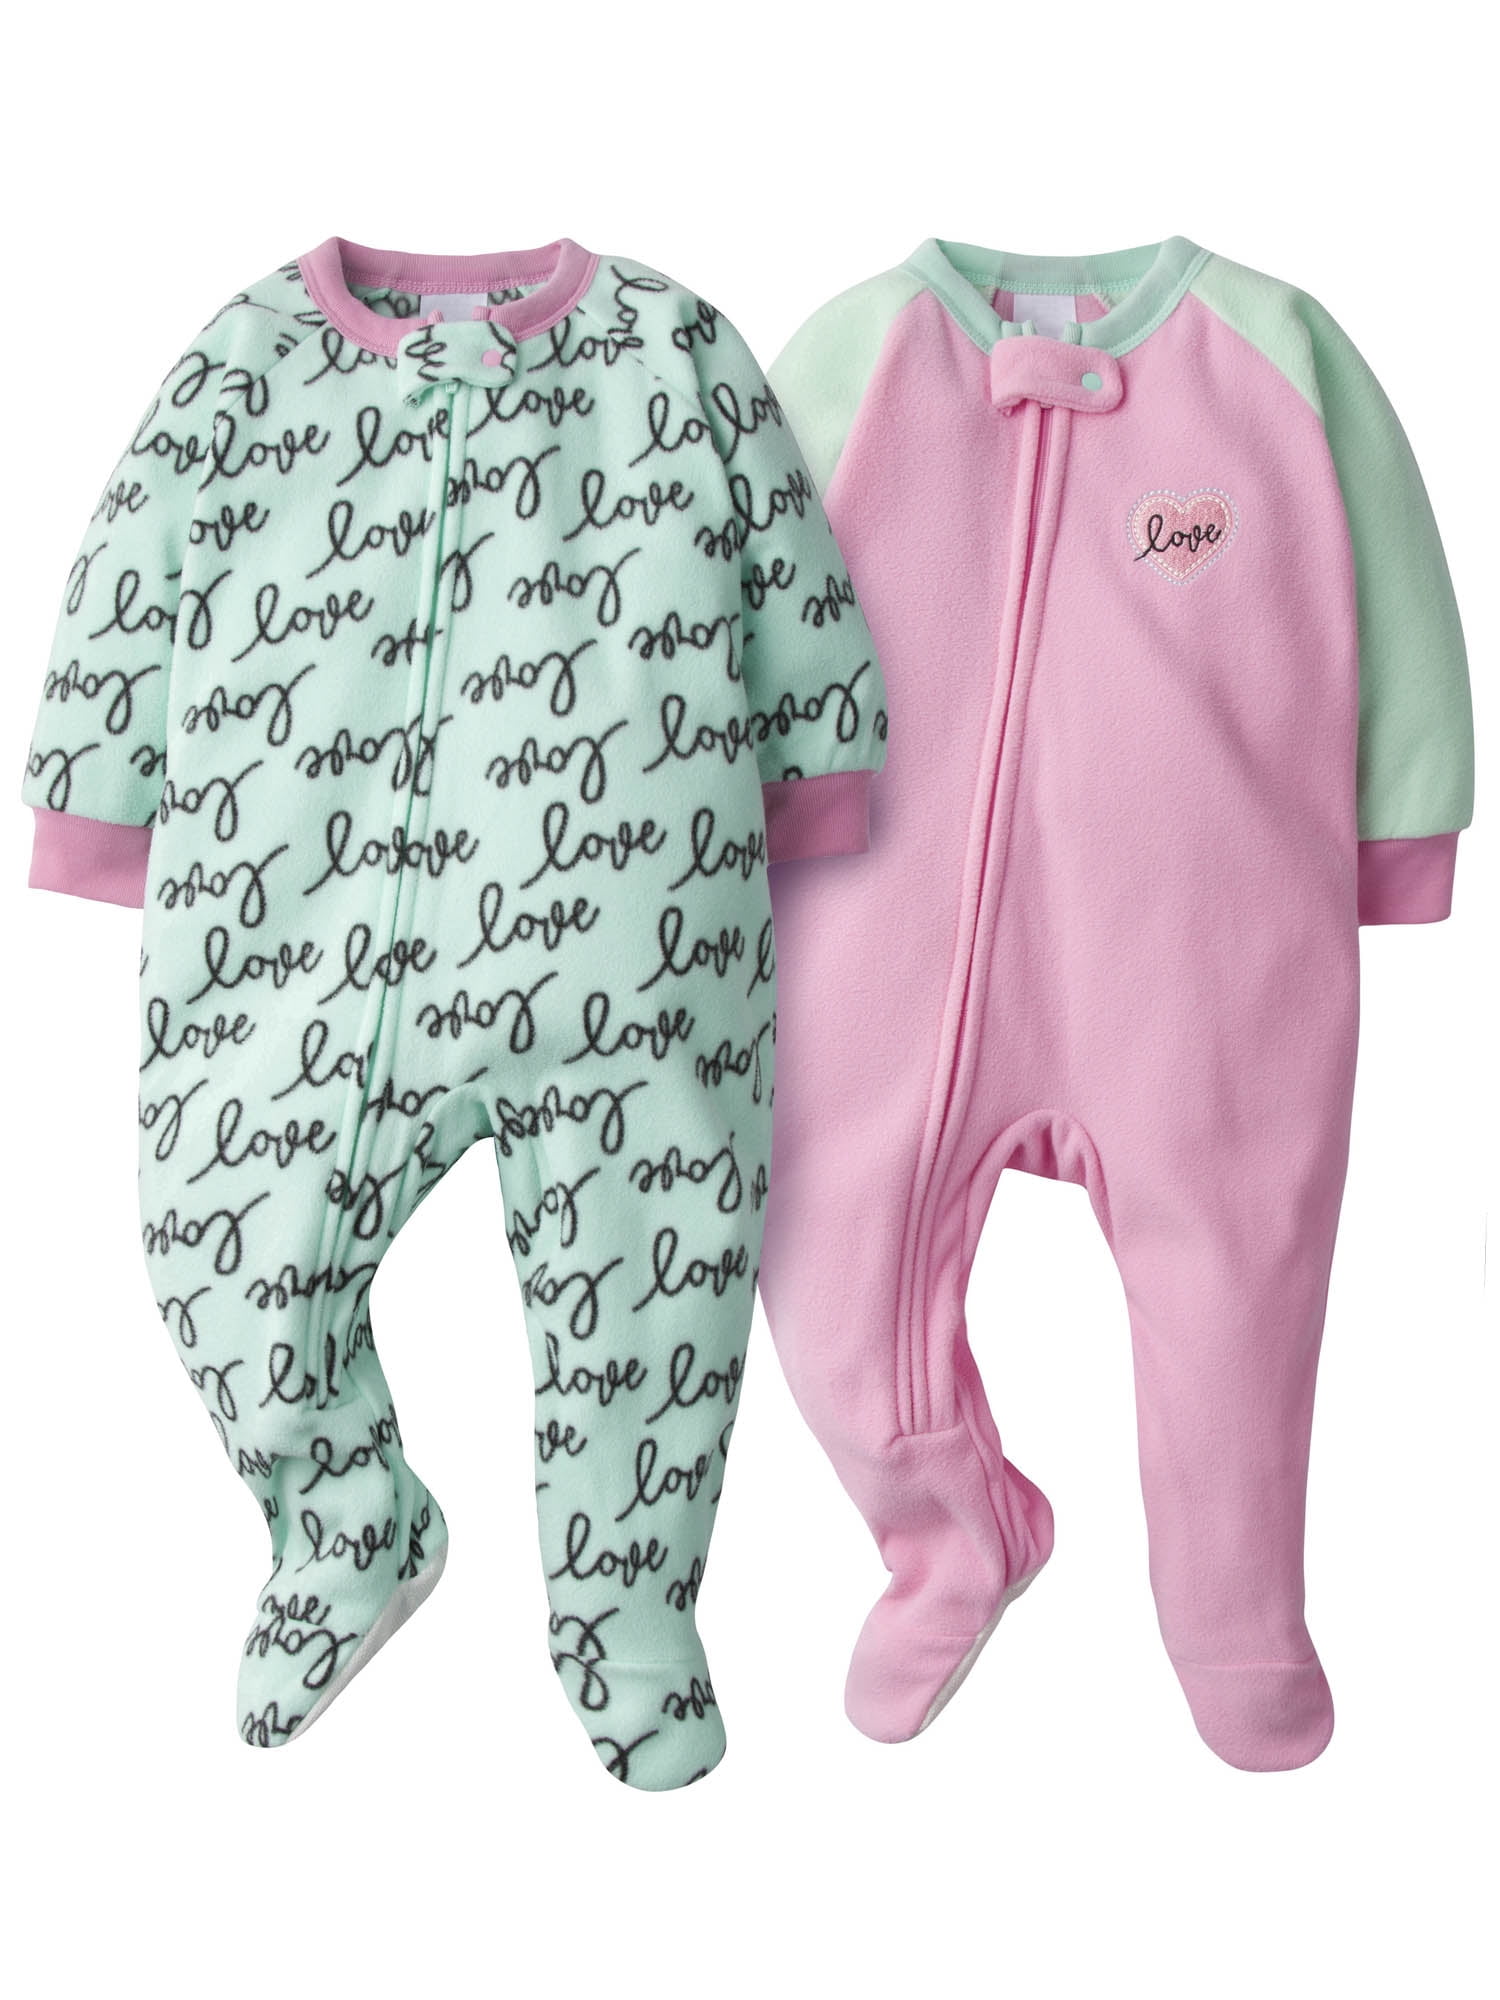 10 Years Girls Fleece Character Onesie Pyjamas Kids Childrens All in One Sleepsuit PJ's Size 18 Months